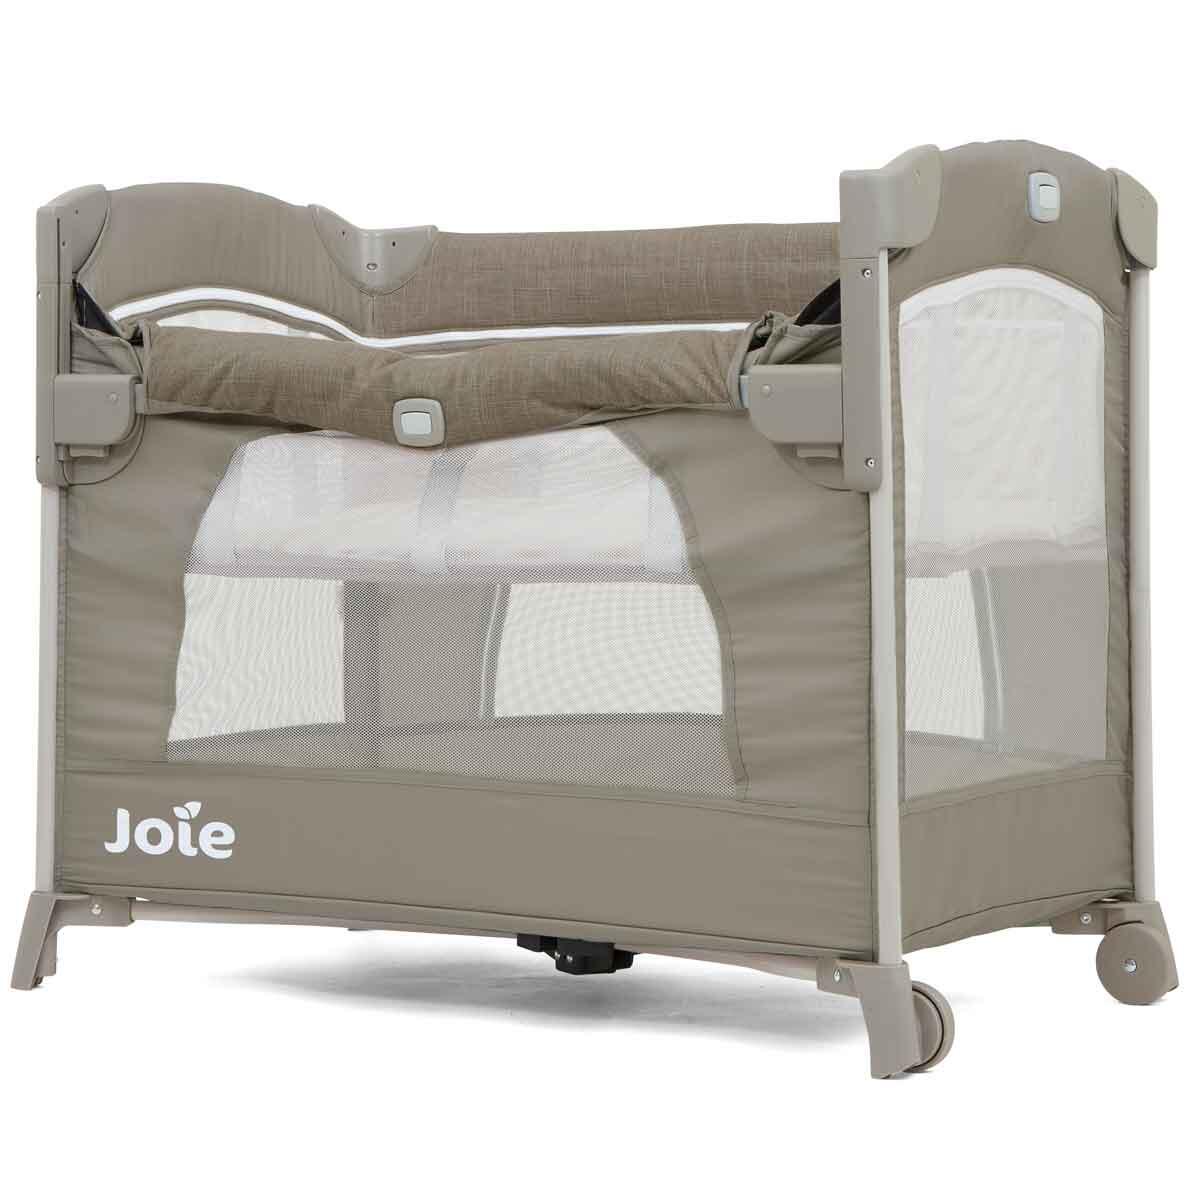 joie cot mattress